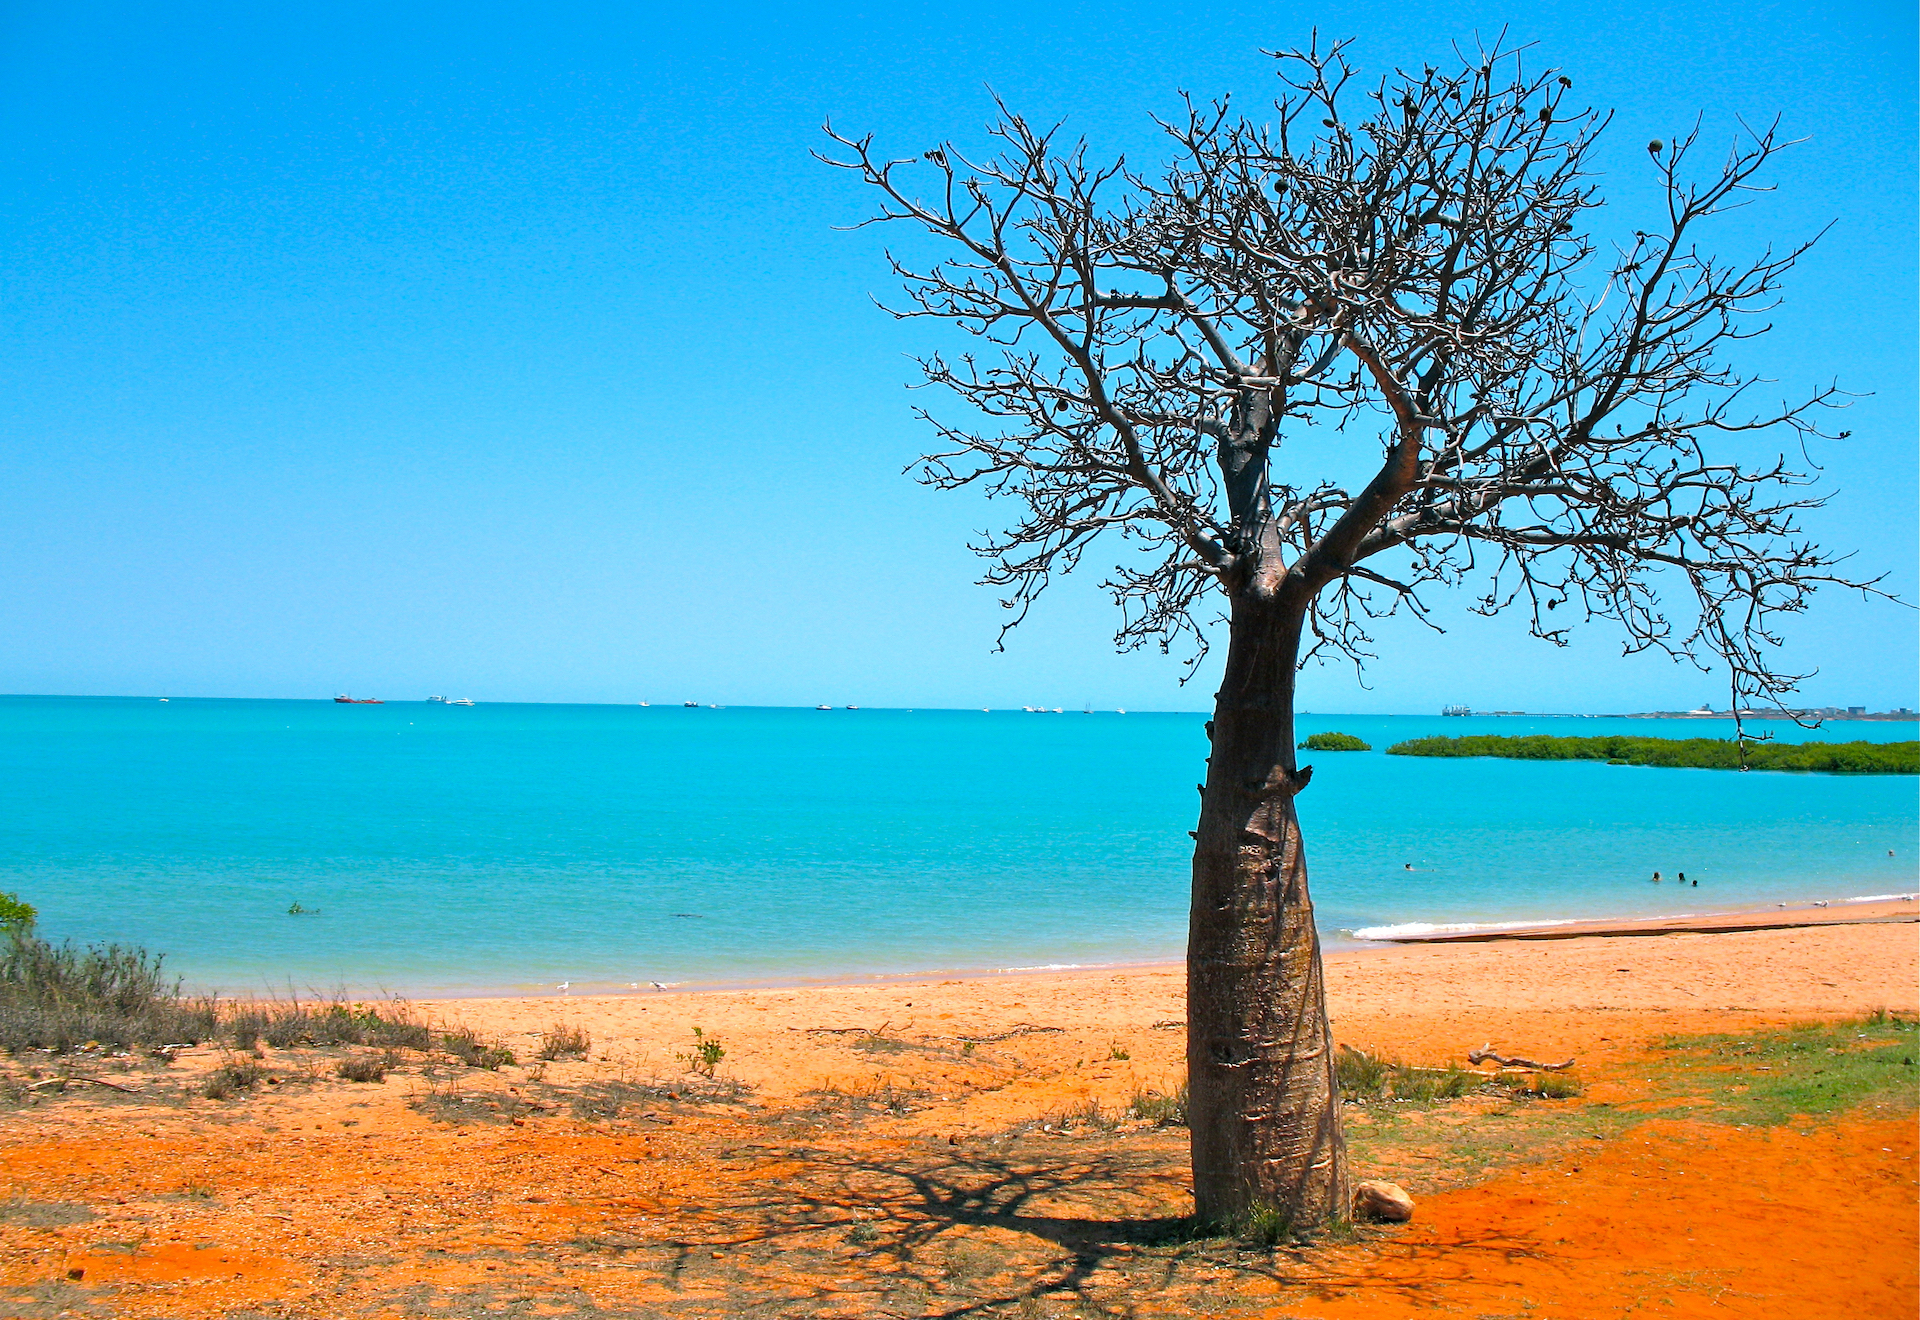 A baobab tree on the beach in Australia